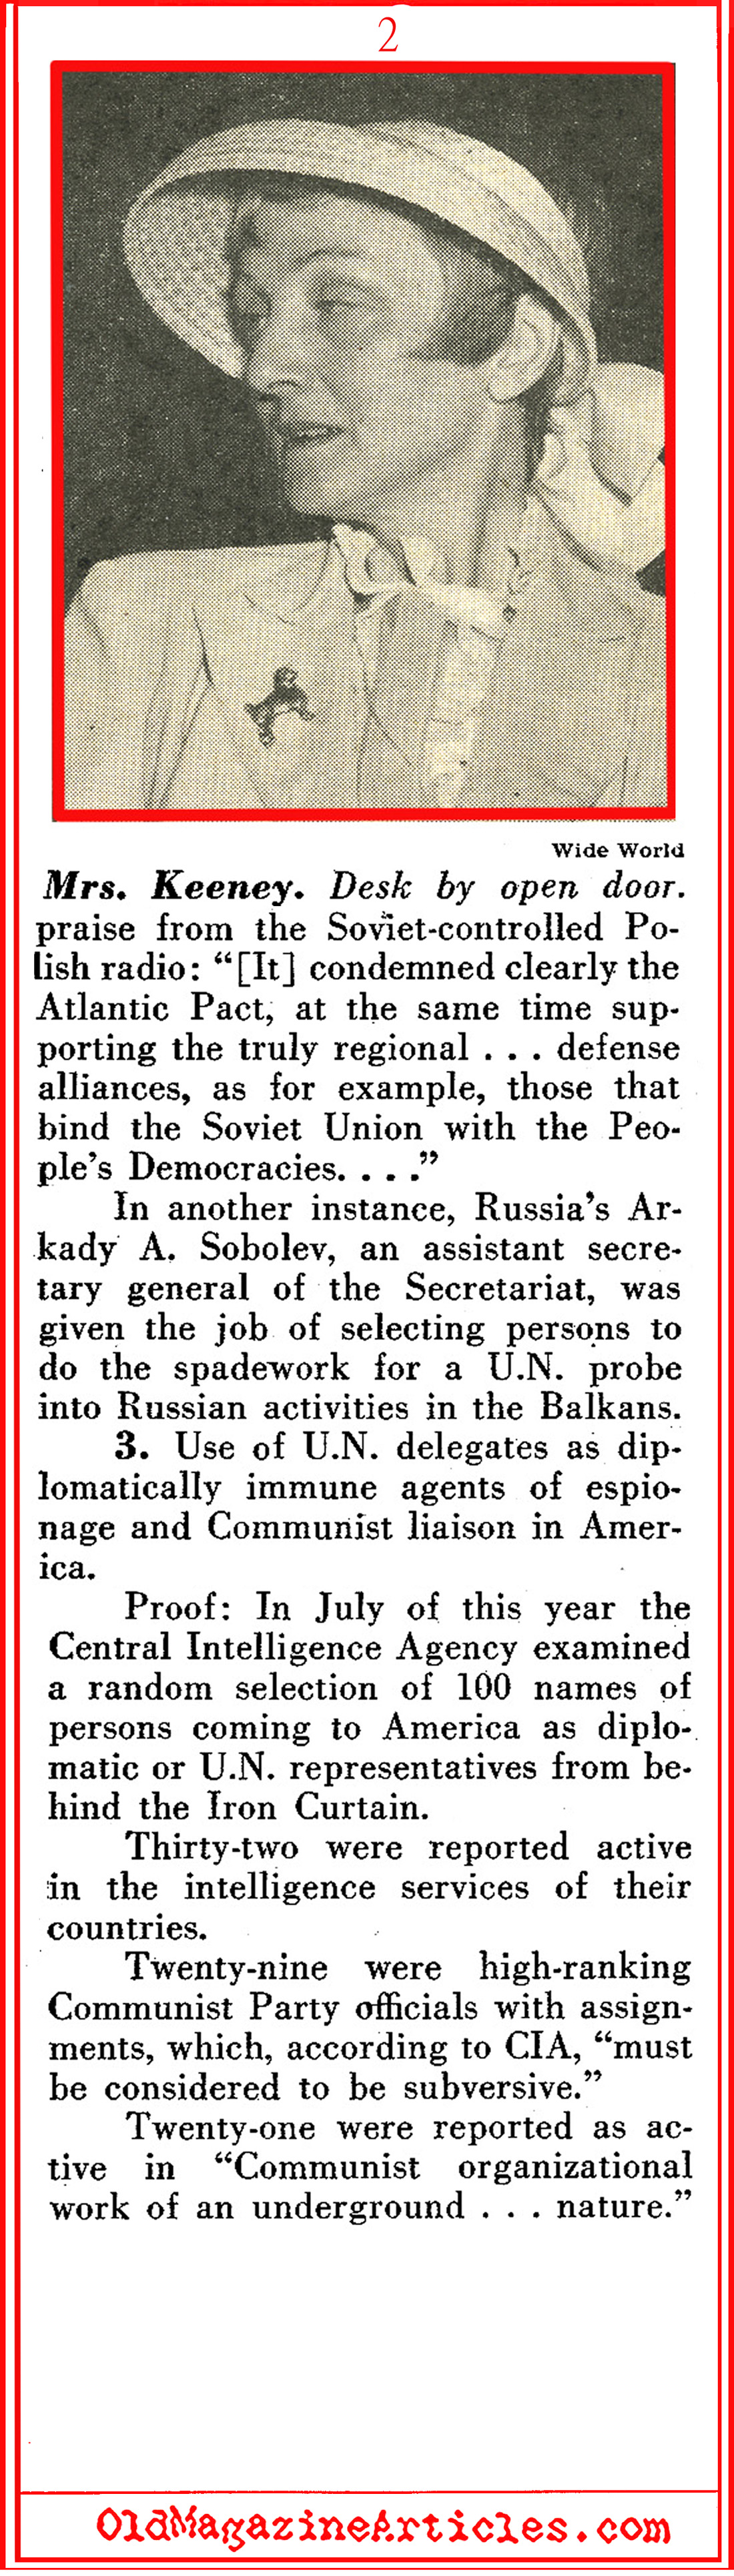 The Soviets at the U.N. (Pathfinder Magazine, 1949)